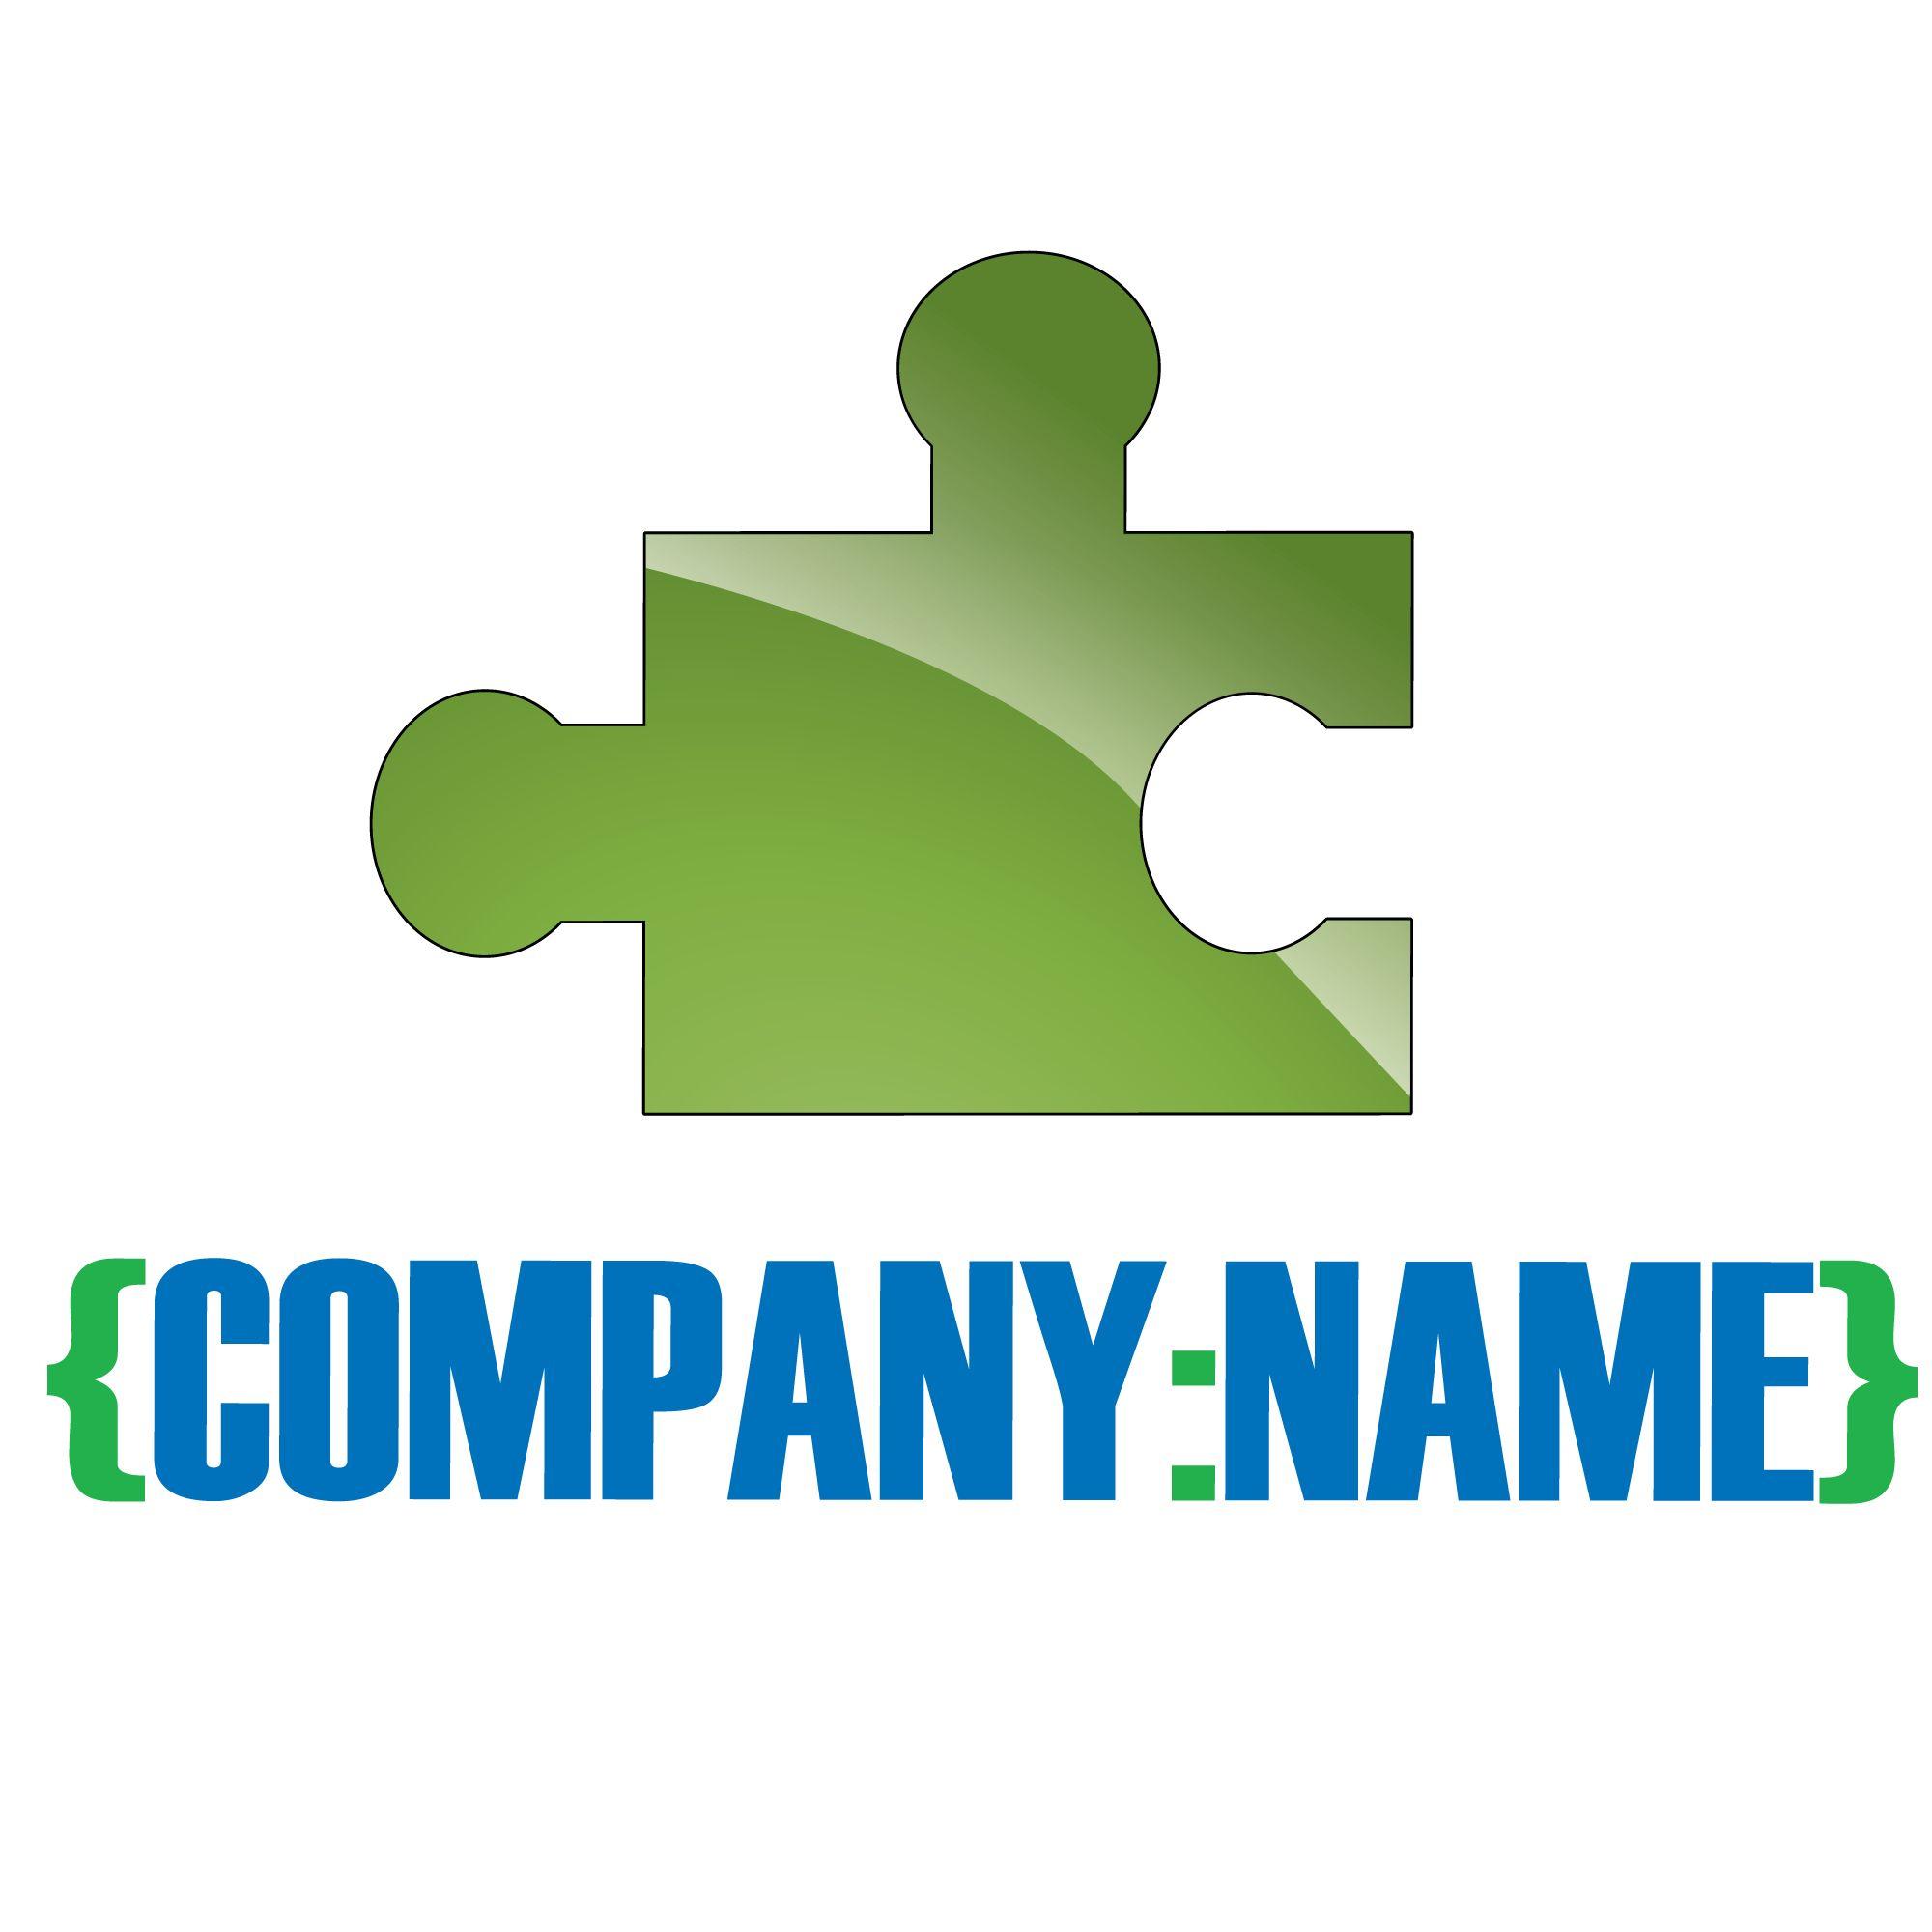 CompanyName VL Logo - Provide 50 editable logos for your company or band by Yogley